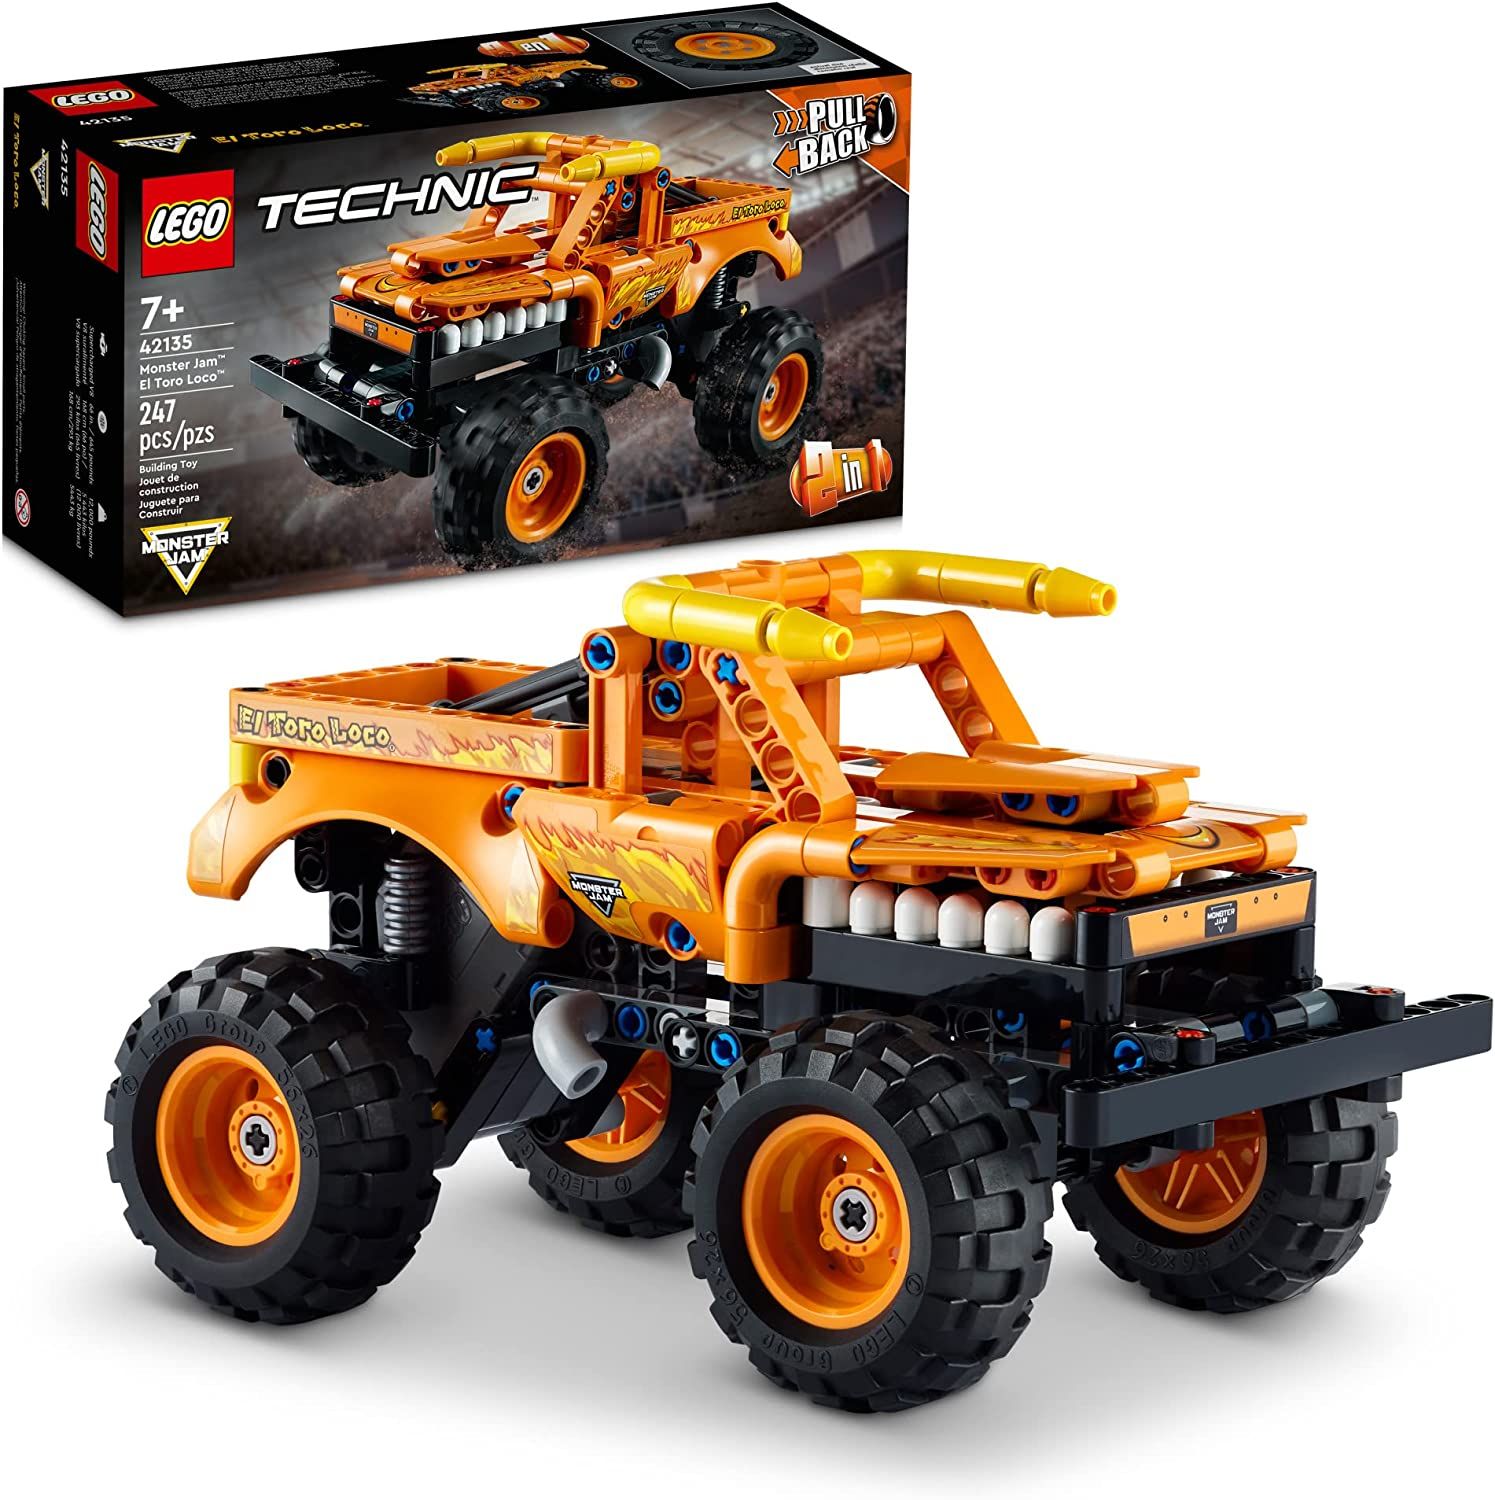 LEGO Technic Monster Jam El Toro Loco 42135 Building Toy Set (247 Pieces) 1